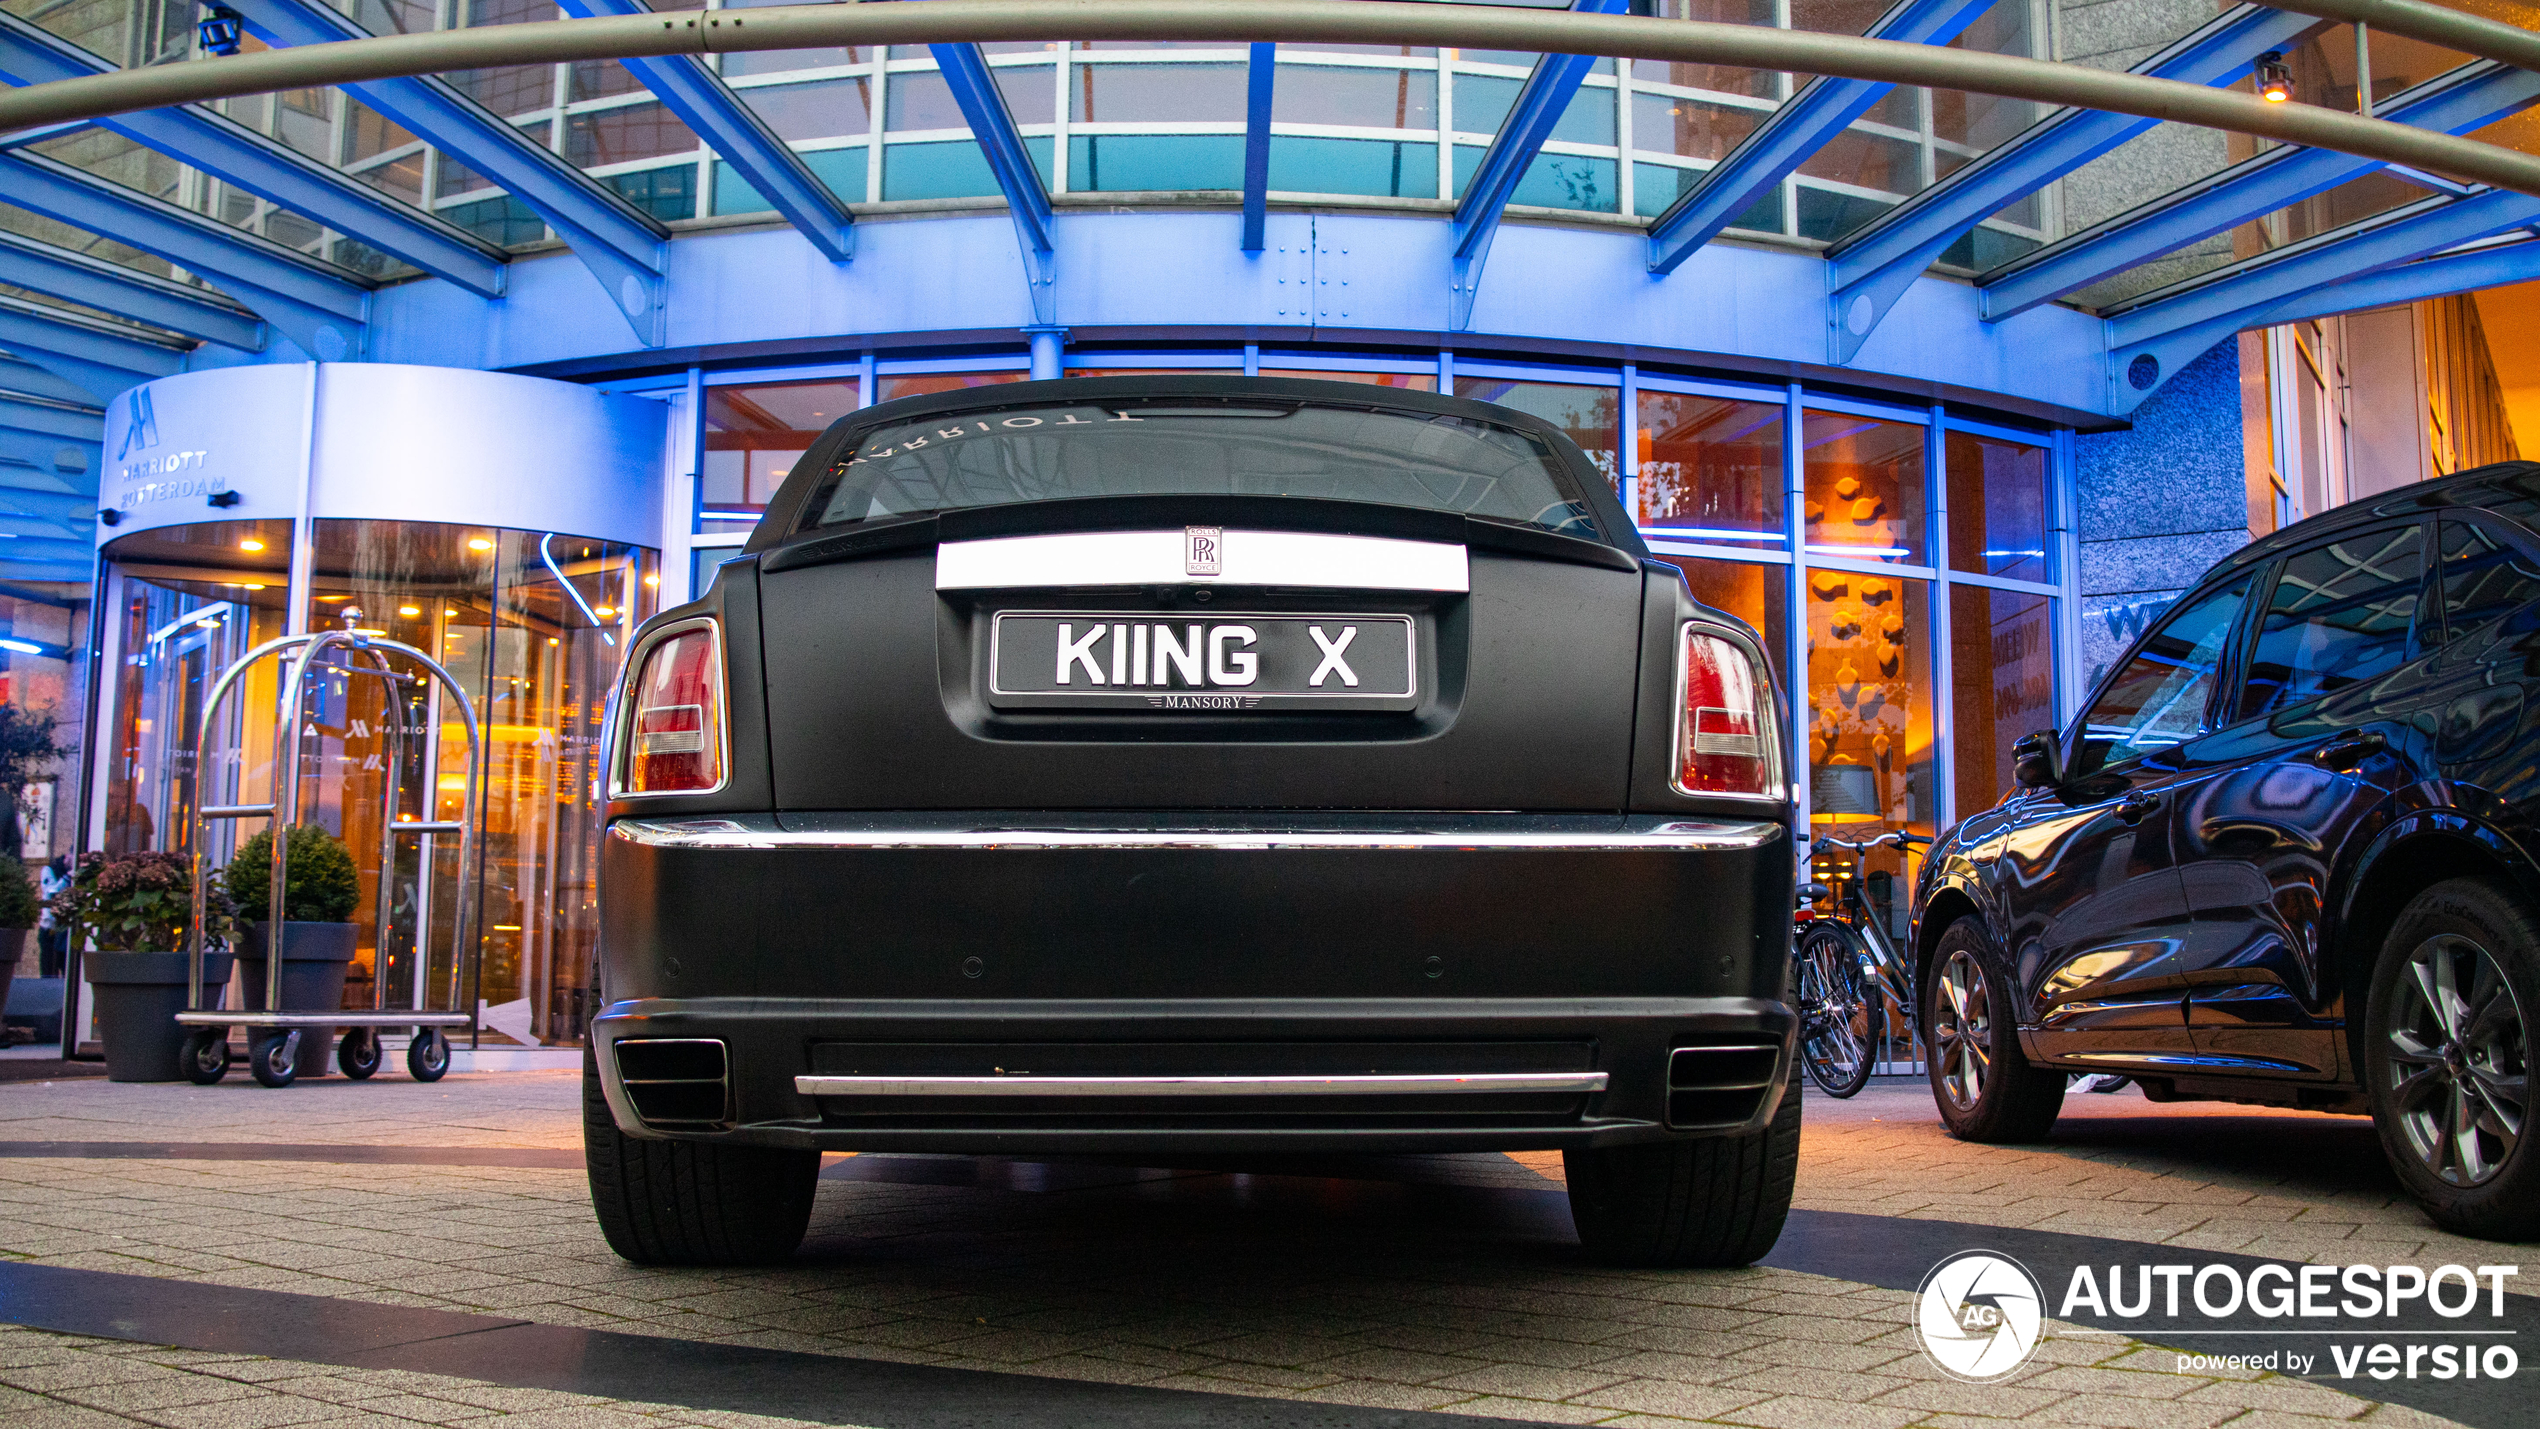 Welke koning rijdt in deze Rolls-Royce?